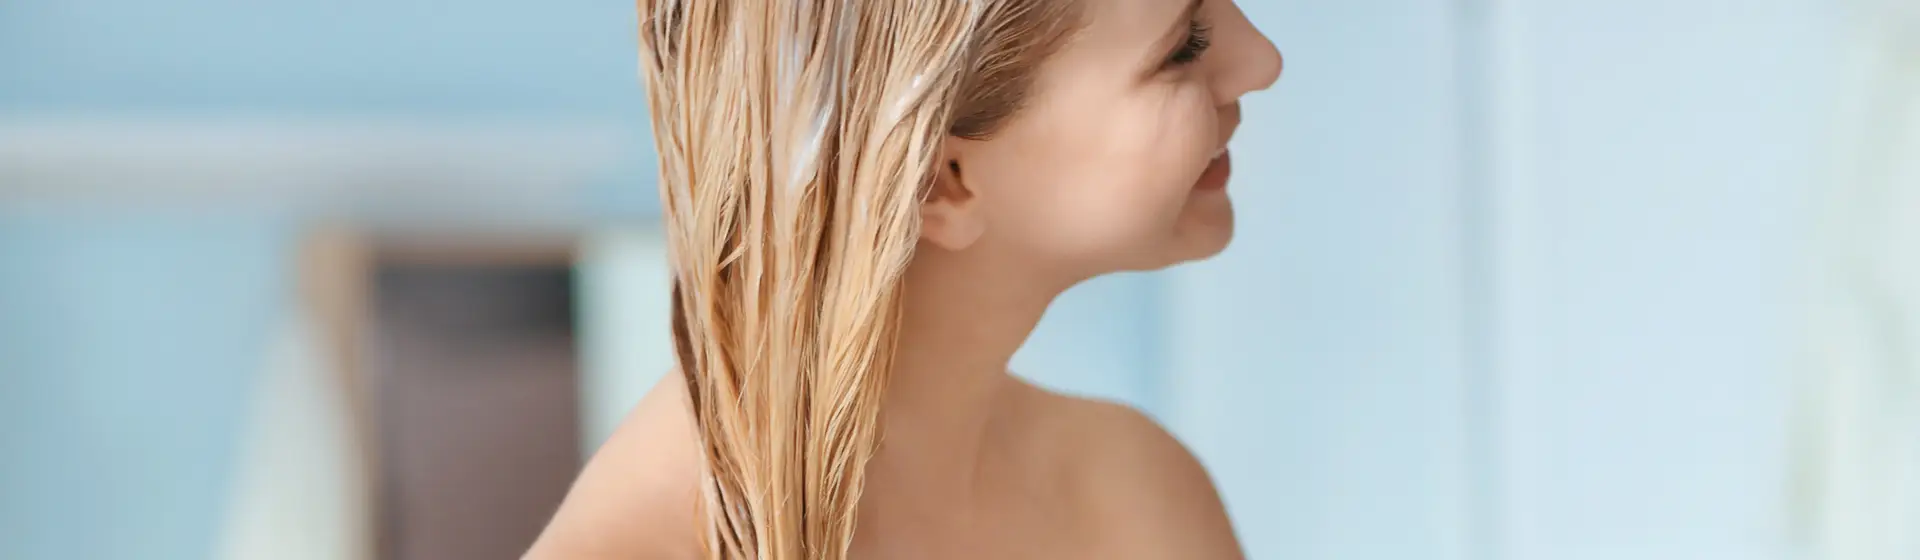 Capa do post: Desmaia cabelo Forever Liss: como usar o kit completo da marca